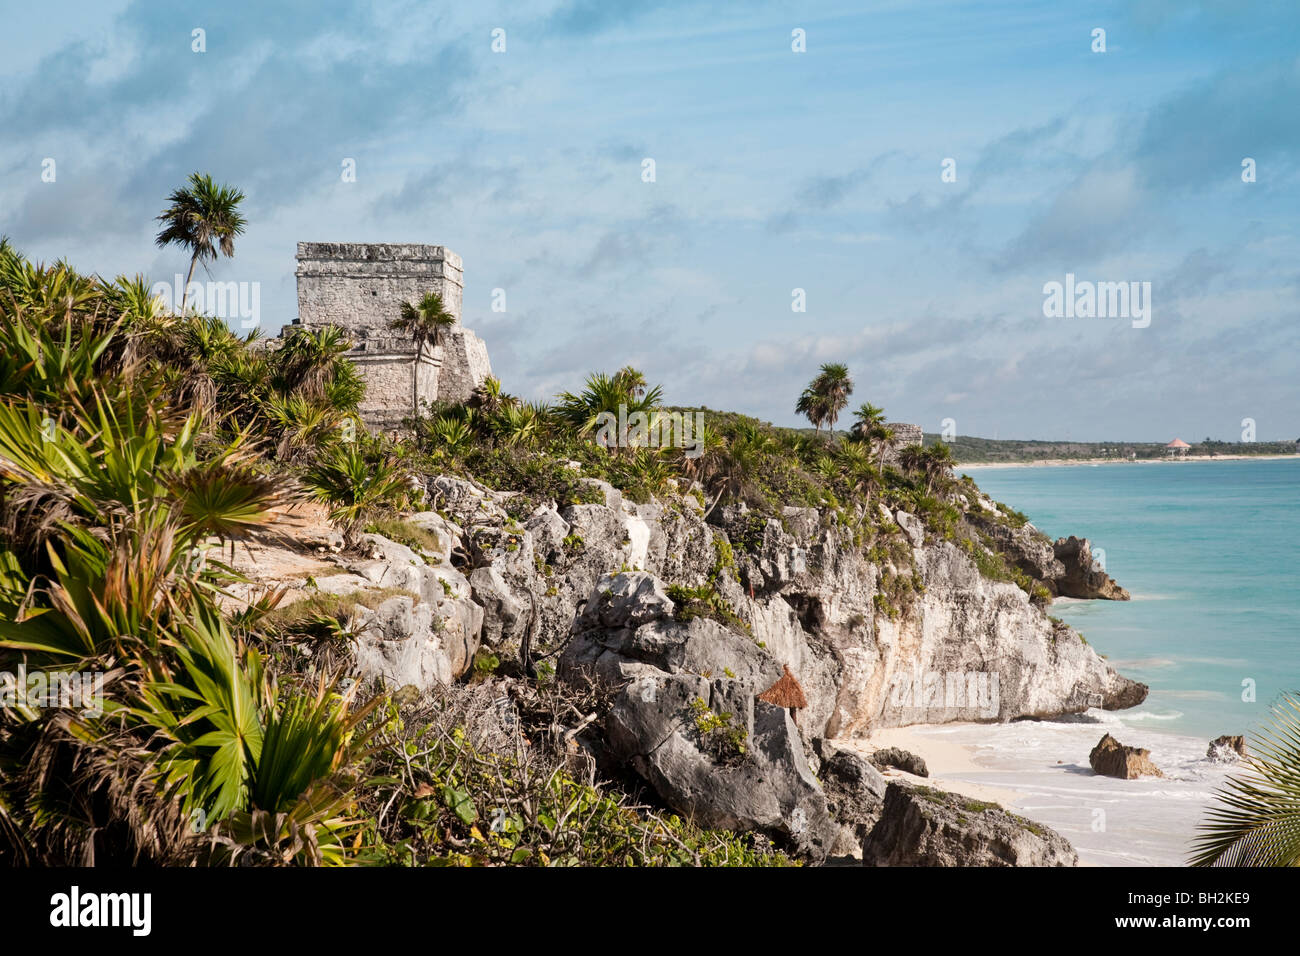 The Maya-Toltec ruins of Tulum on the Yucatan peninsula in Mexico. Stock Photo